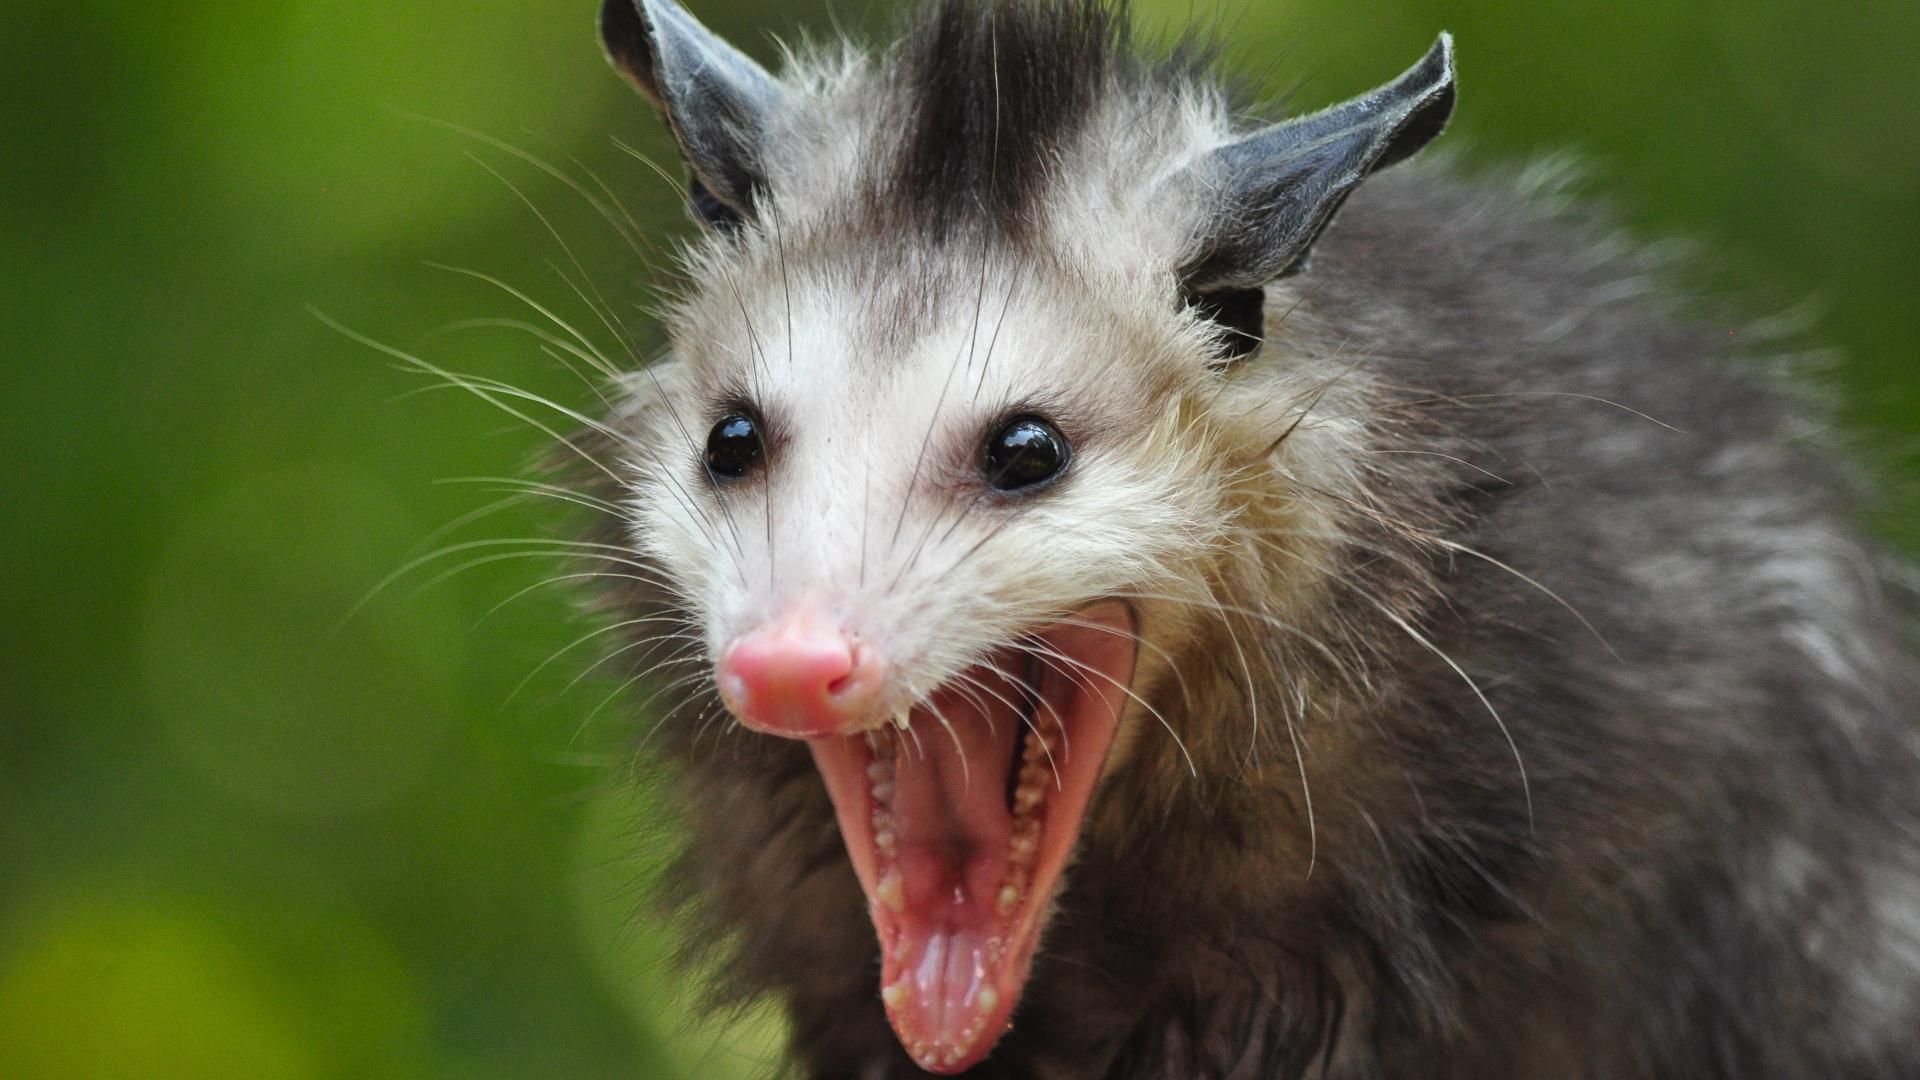 I found a baby opossum | DFW Wildlife Organization